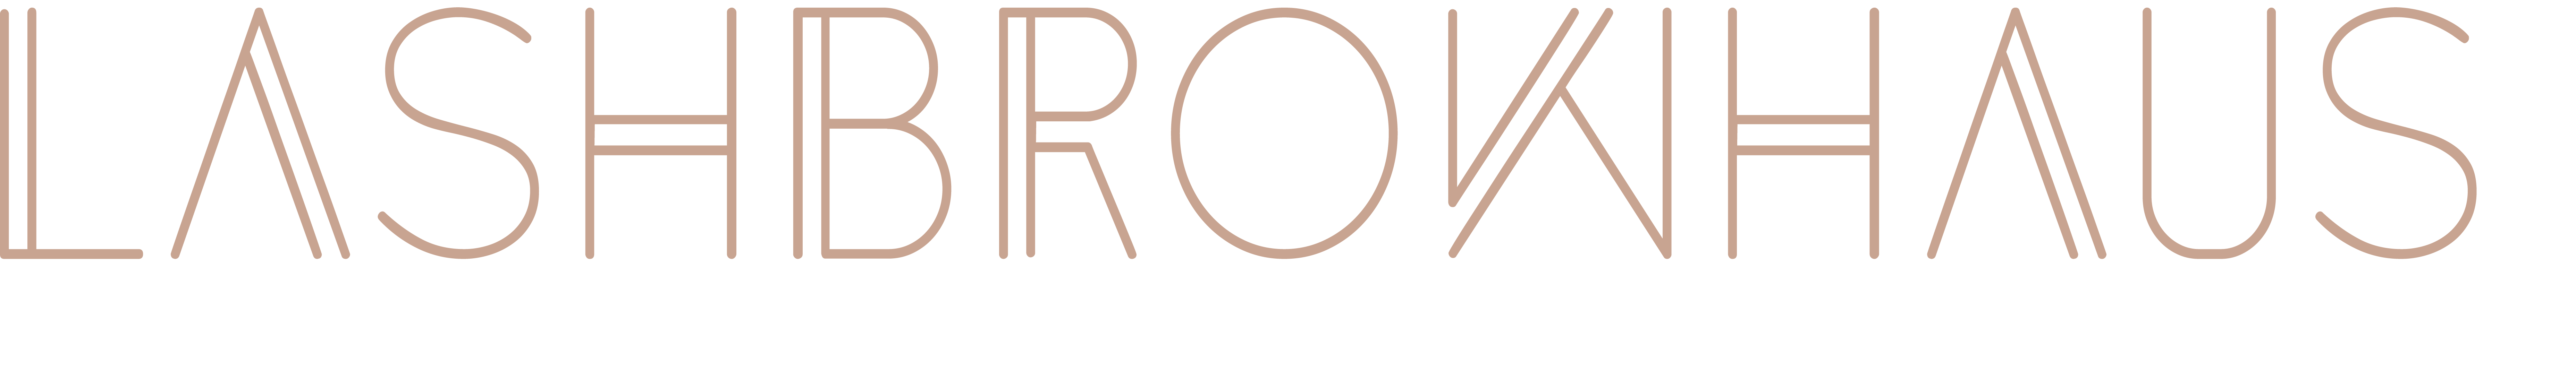 Lash Brow Haus Logo